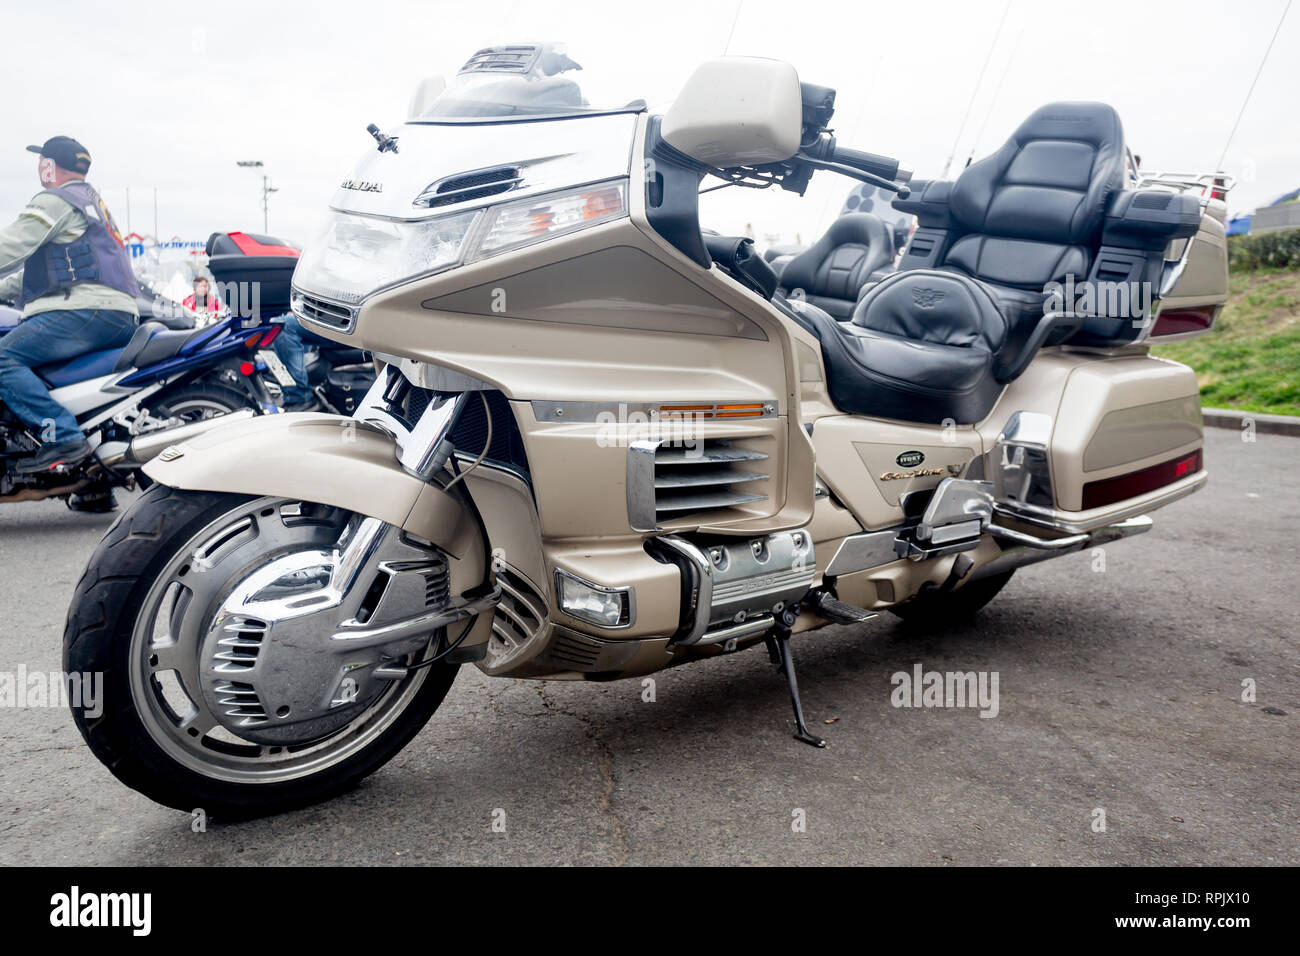 Honda Goldwing Motorbike Motorcycle Stockfotos und -bilder Kaufen - Alamy